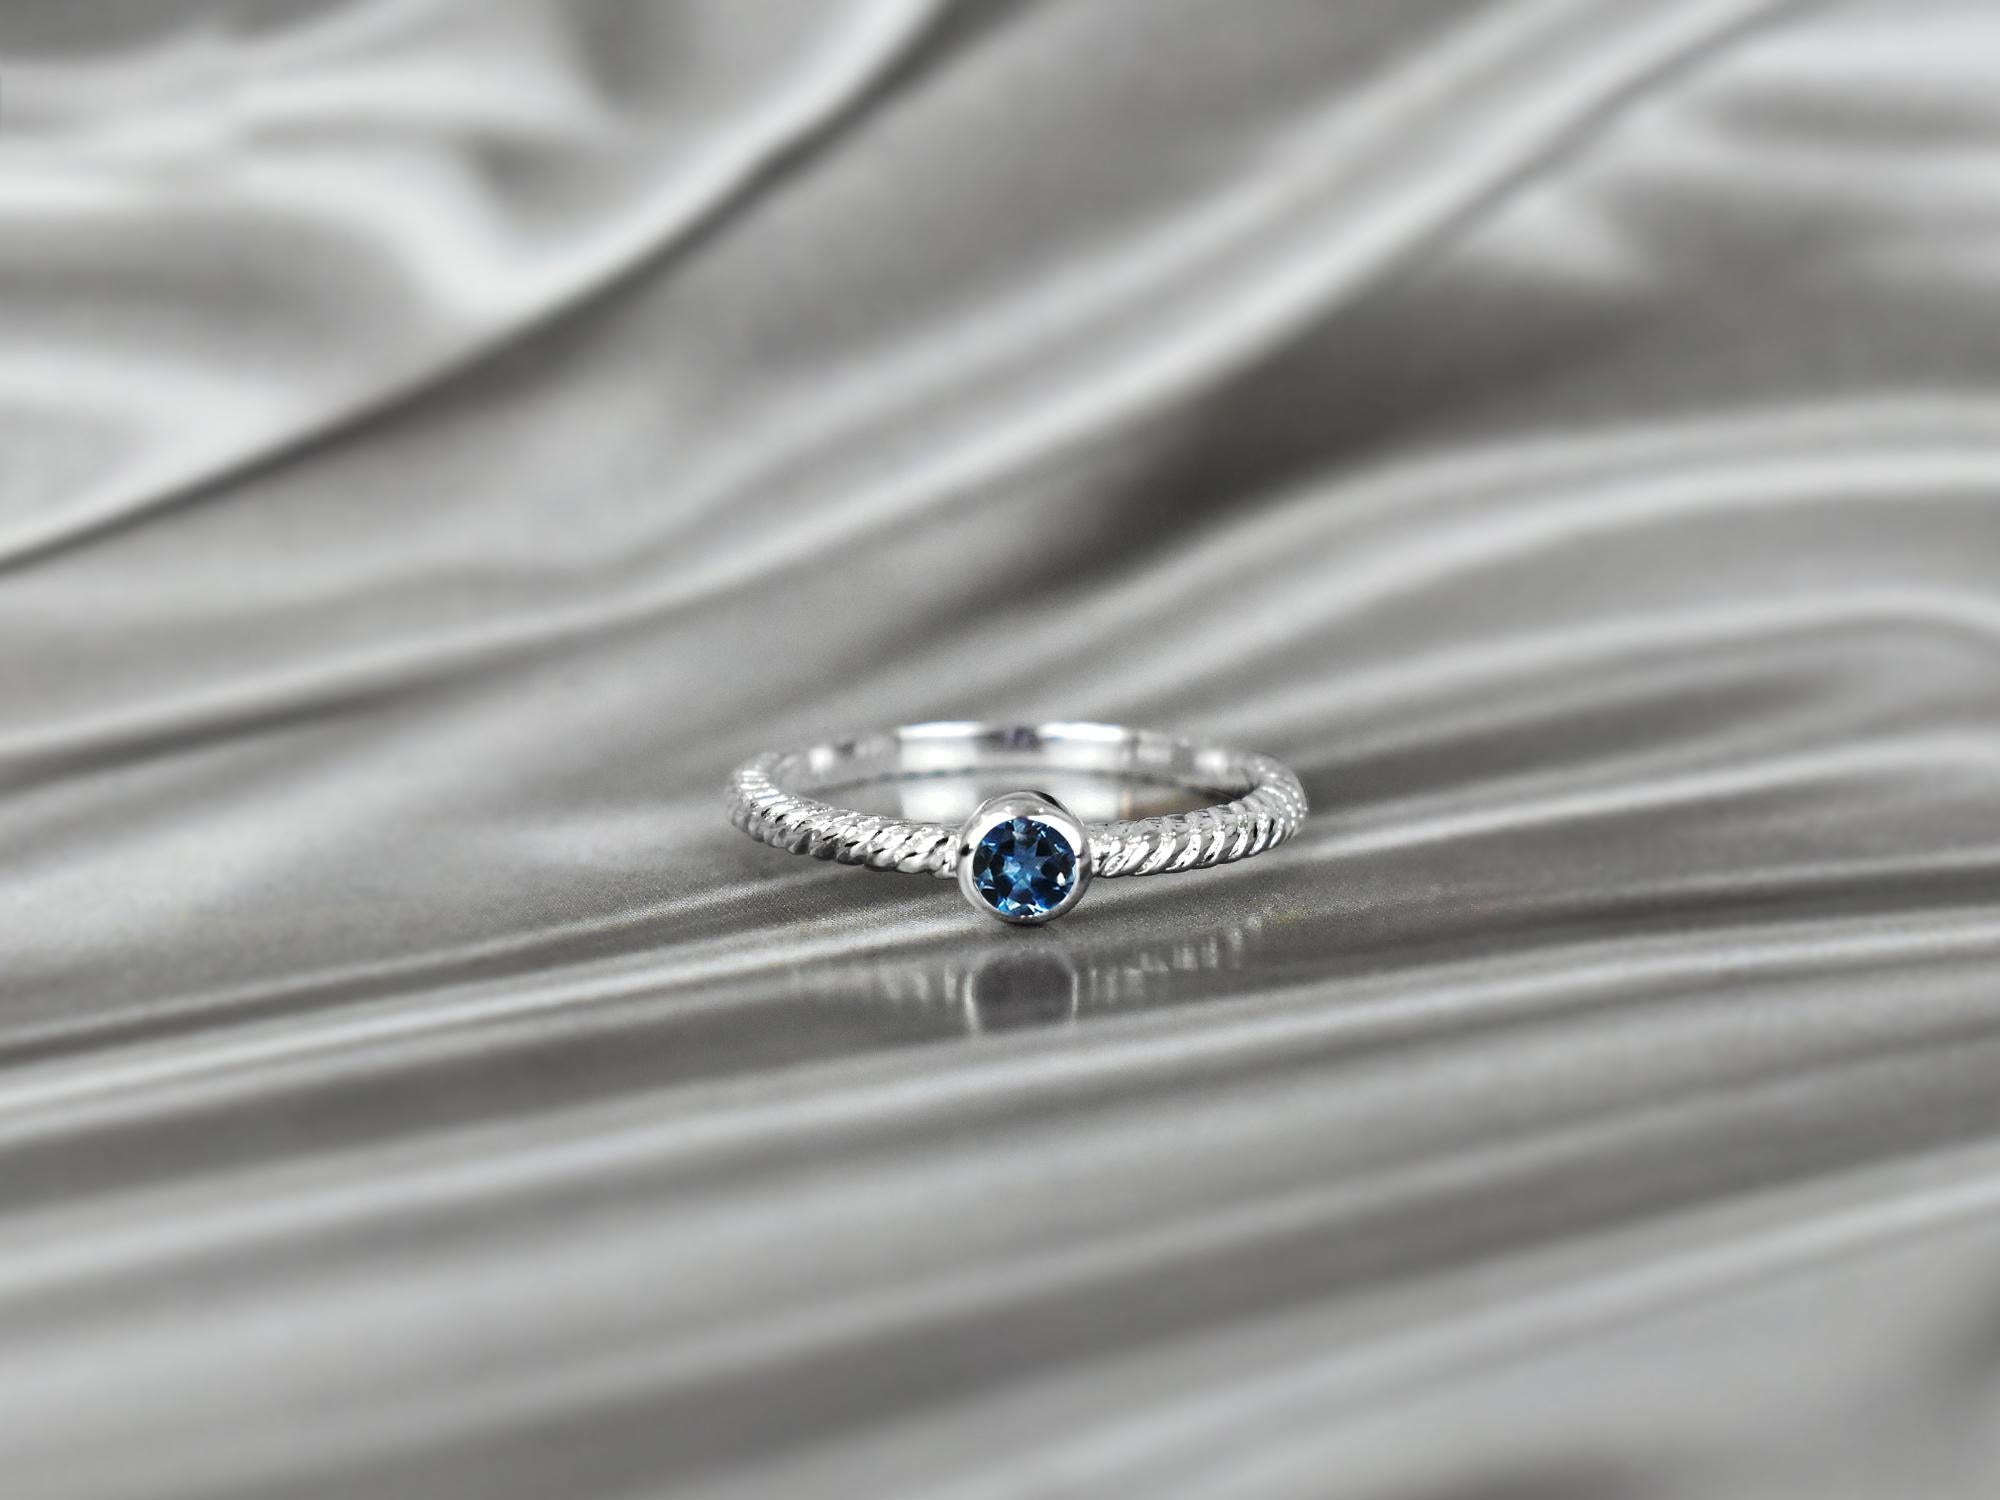 For Sale:  10k Gold Round Gemstone 3.5mm Round Gemstone Ring Birthstone Ring Stackable Ring 7